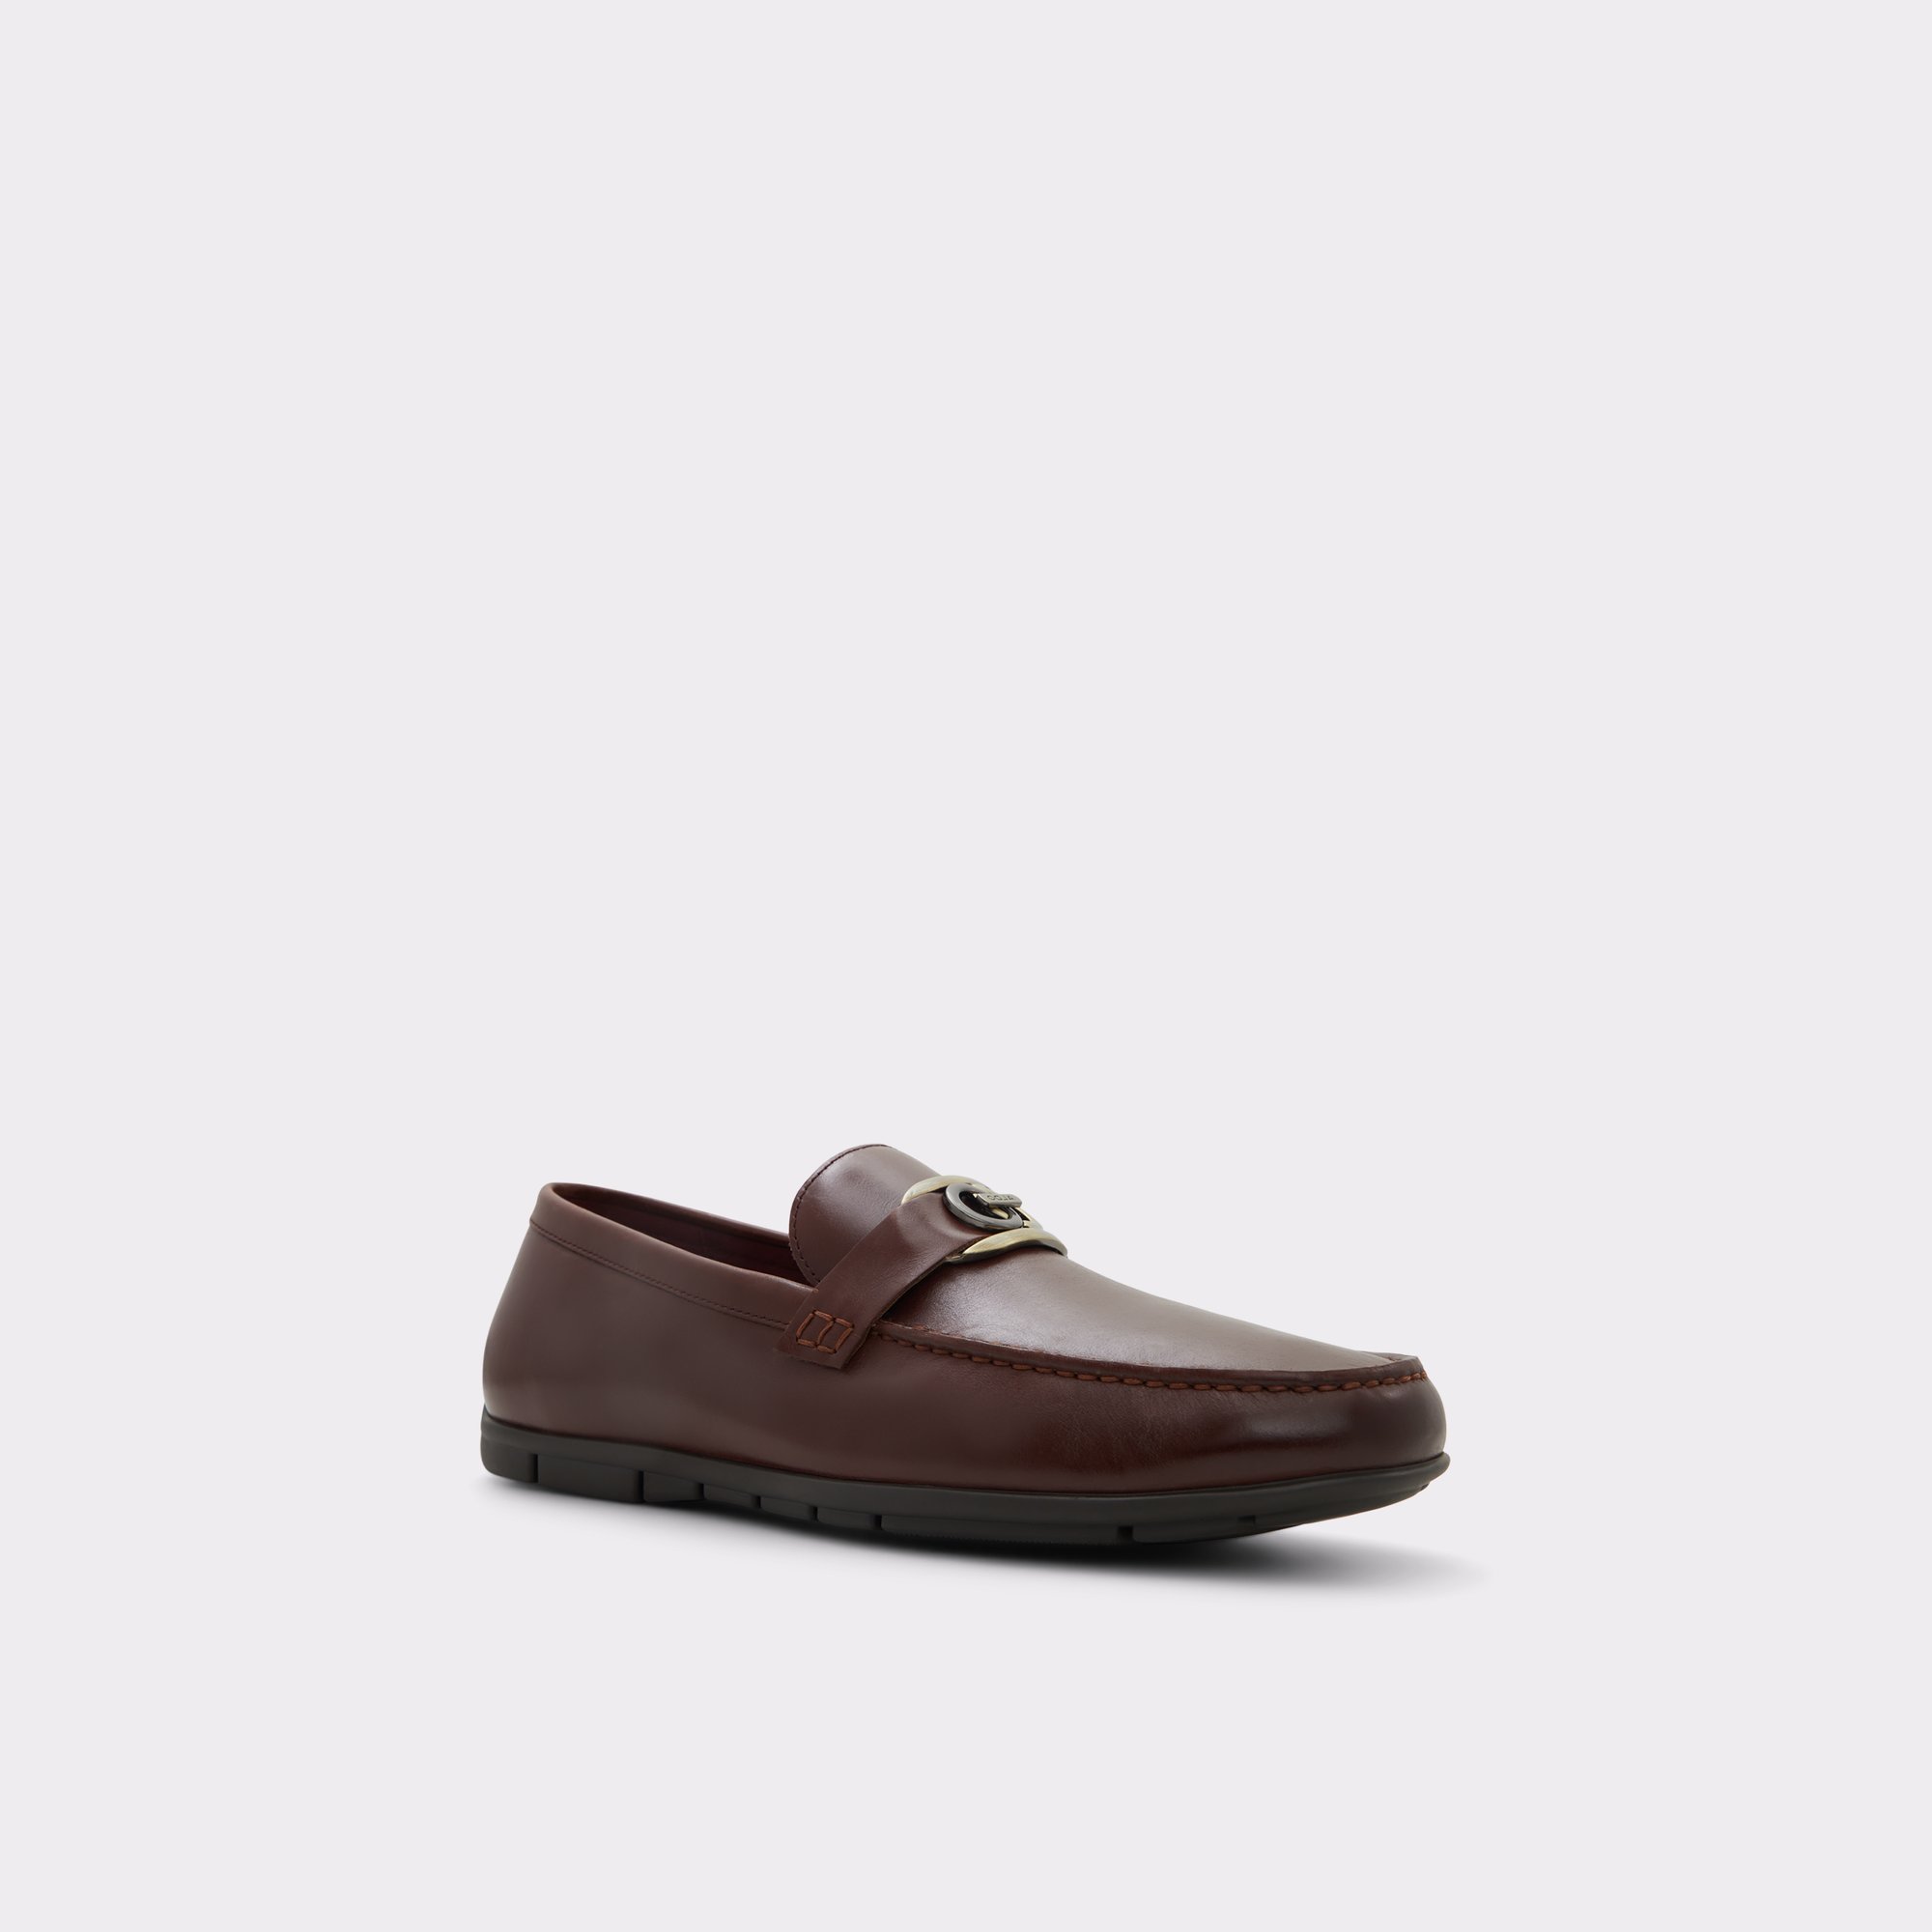 Haan Bordo Men's Casual Shoes | ALDO Canada